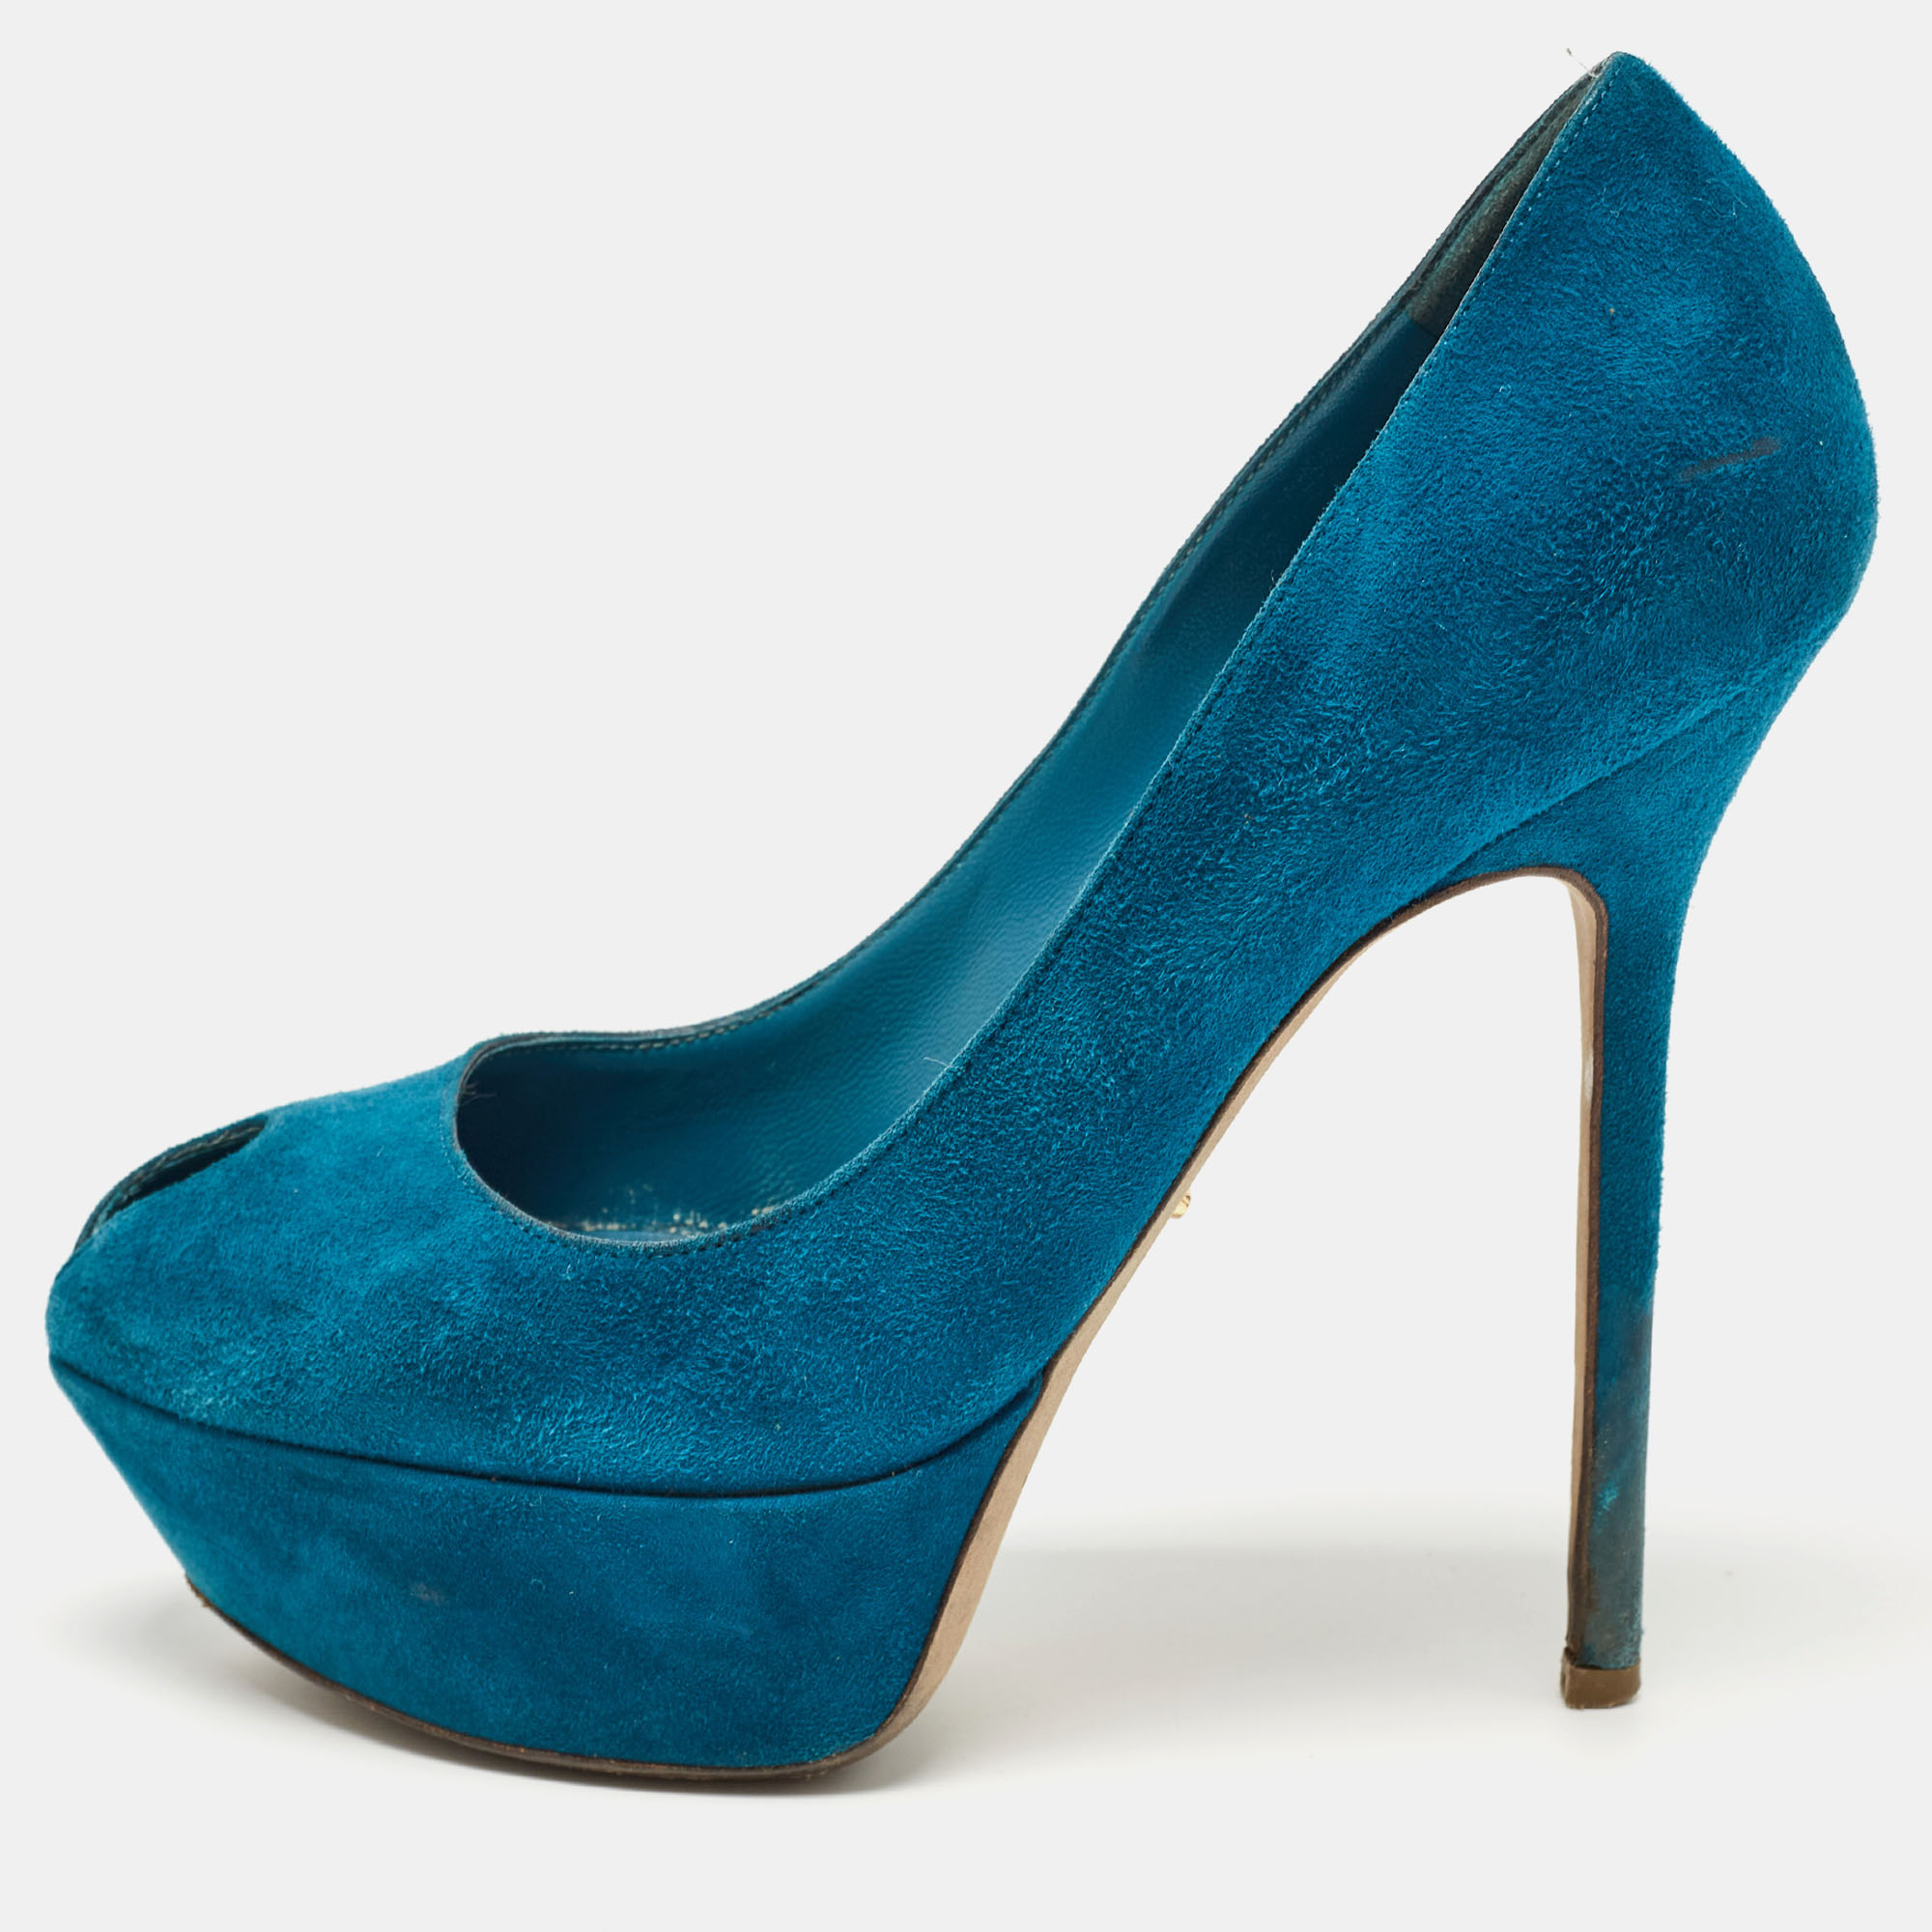 Sergio rossi blue suede peep toe platform pumps size 37.5